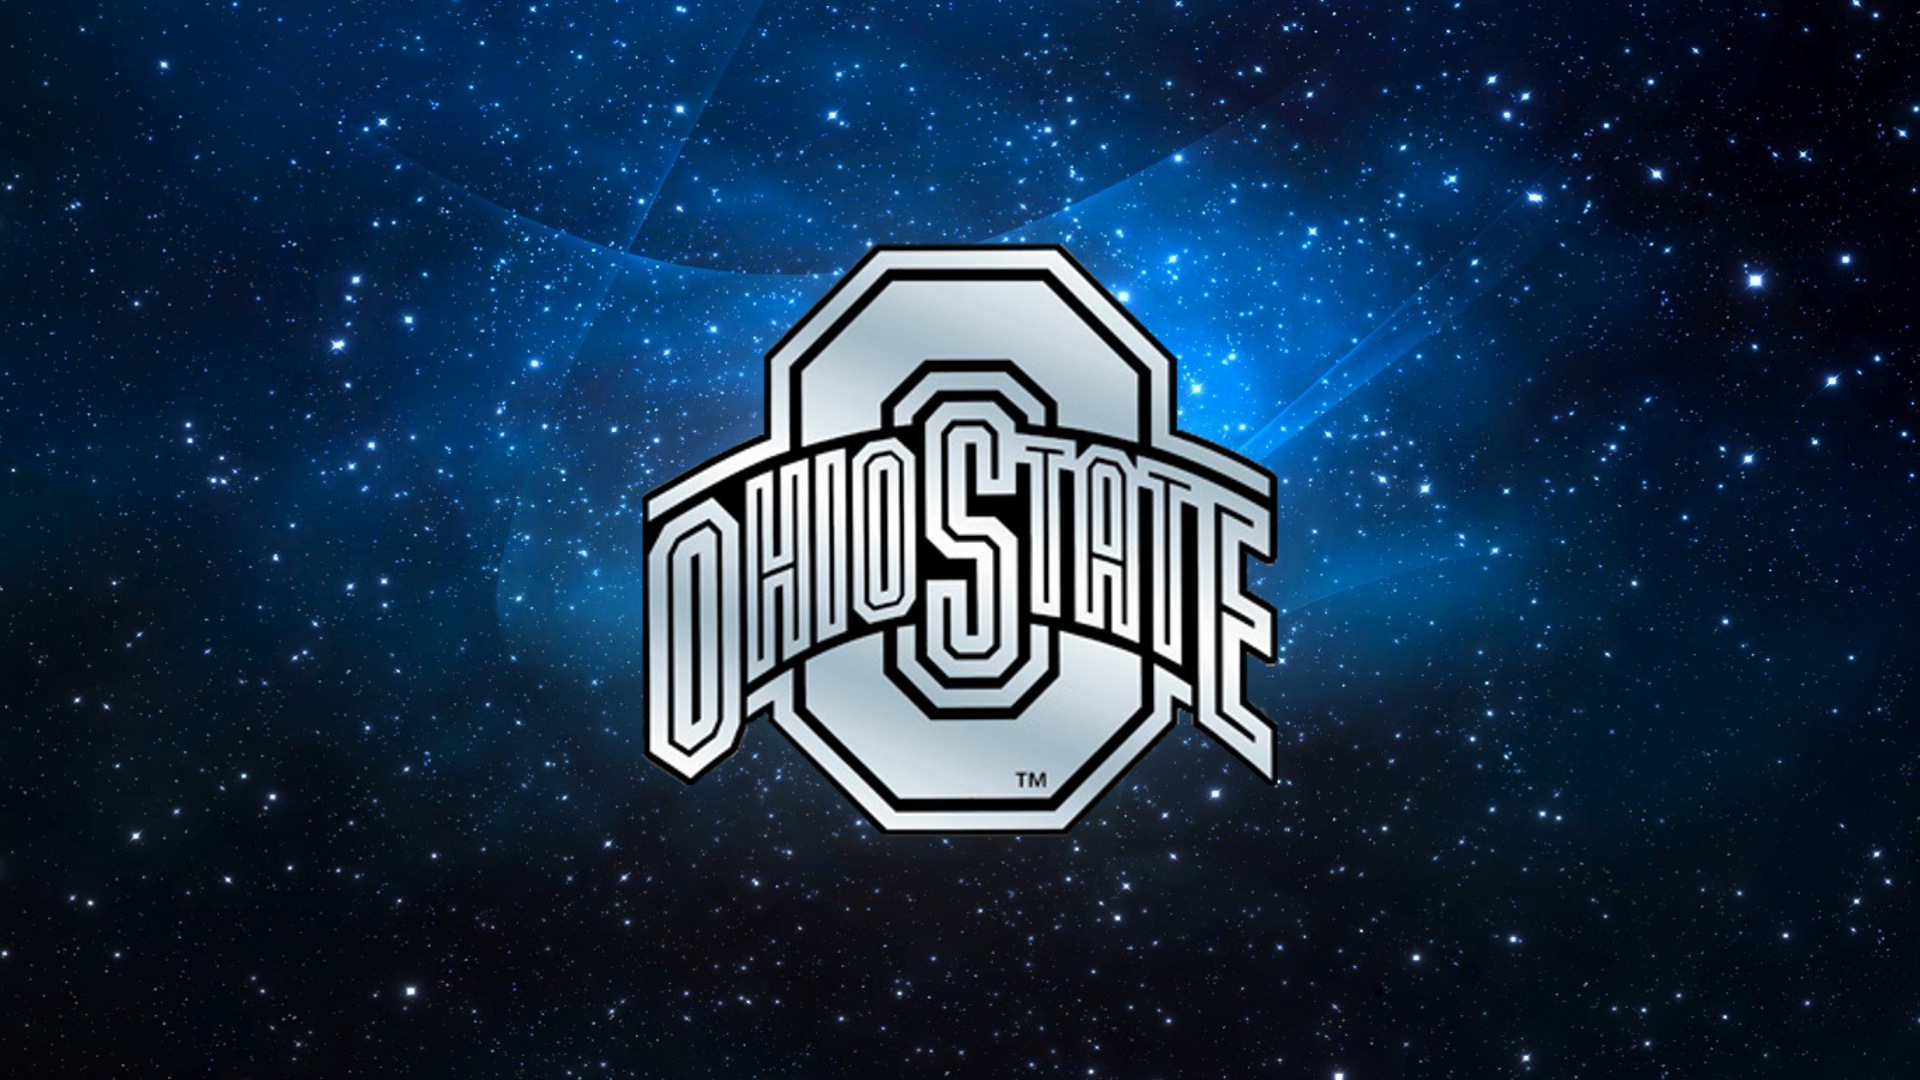 Osu Desktop Wallpaper Ohio State Football